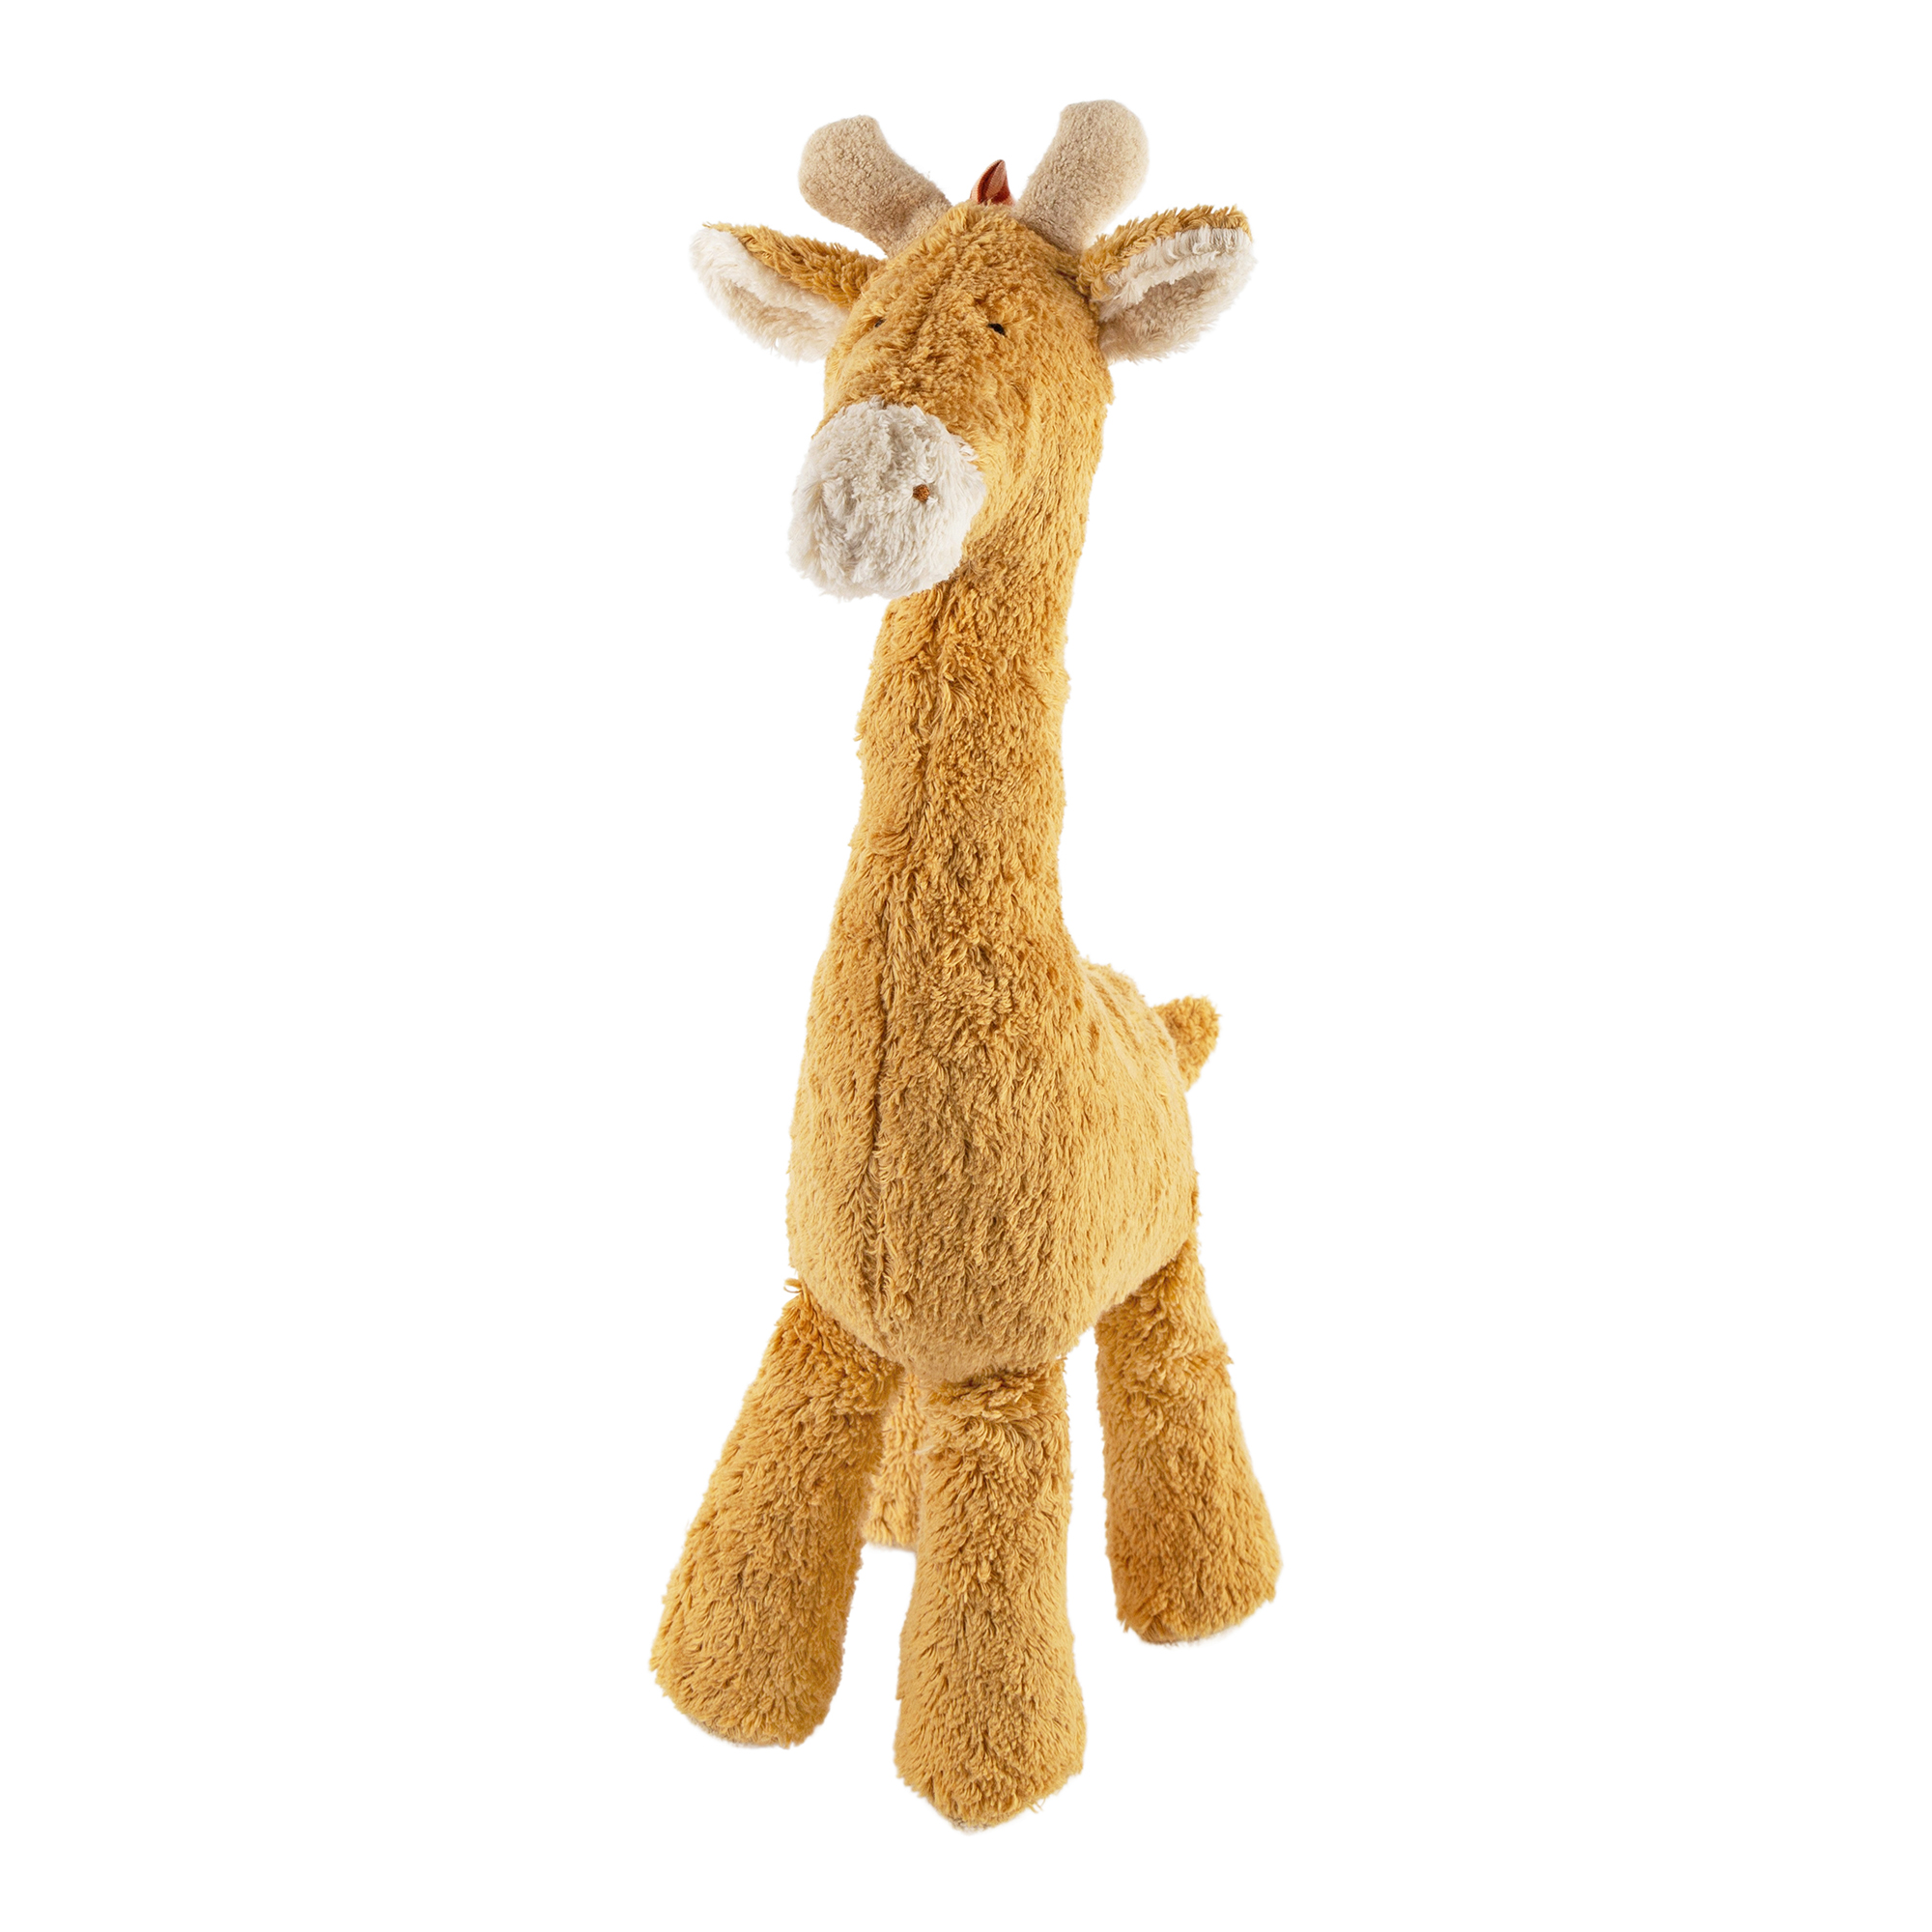 Organic soft toy giraffe, Green Collection